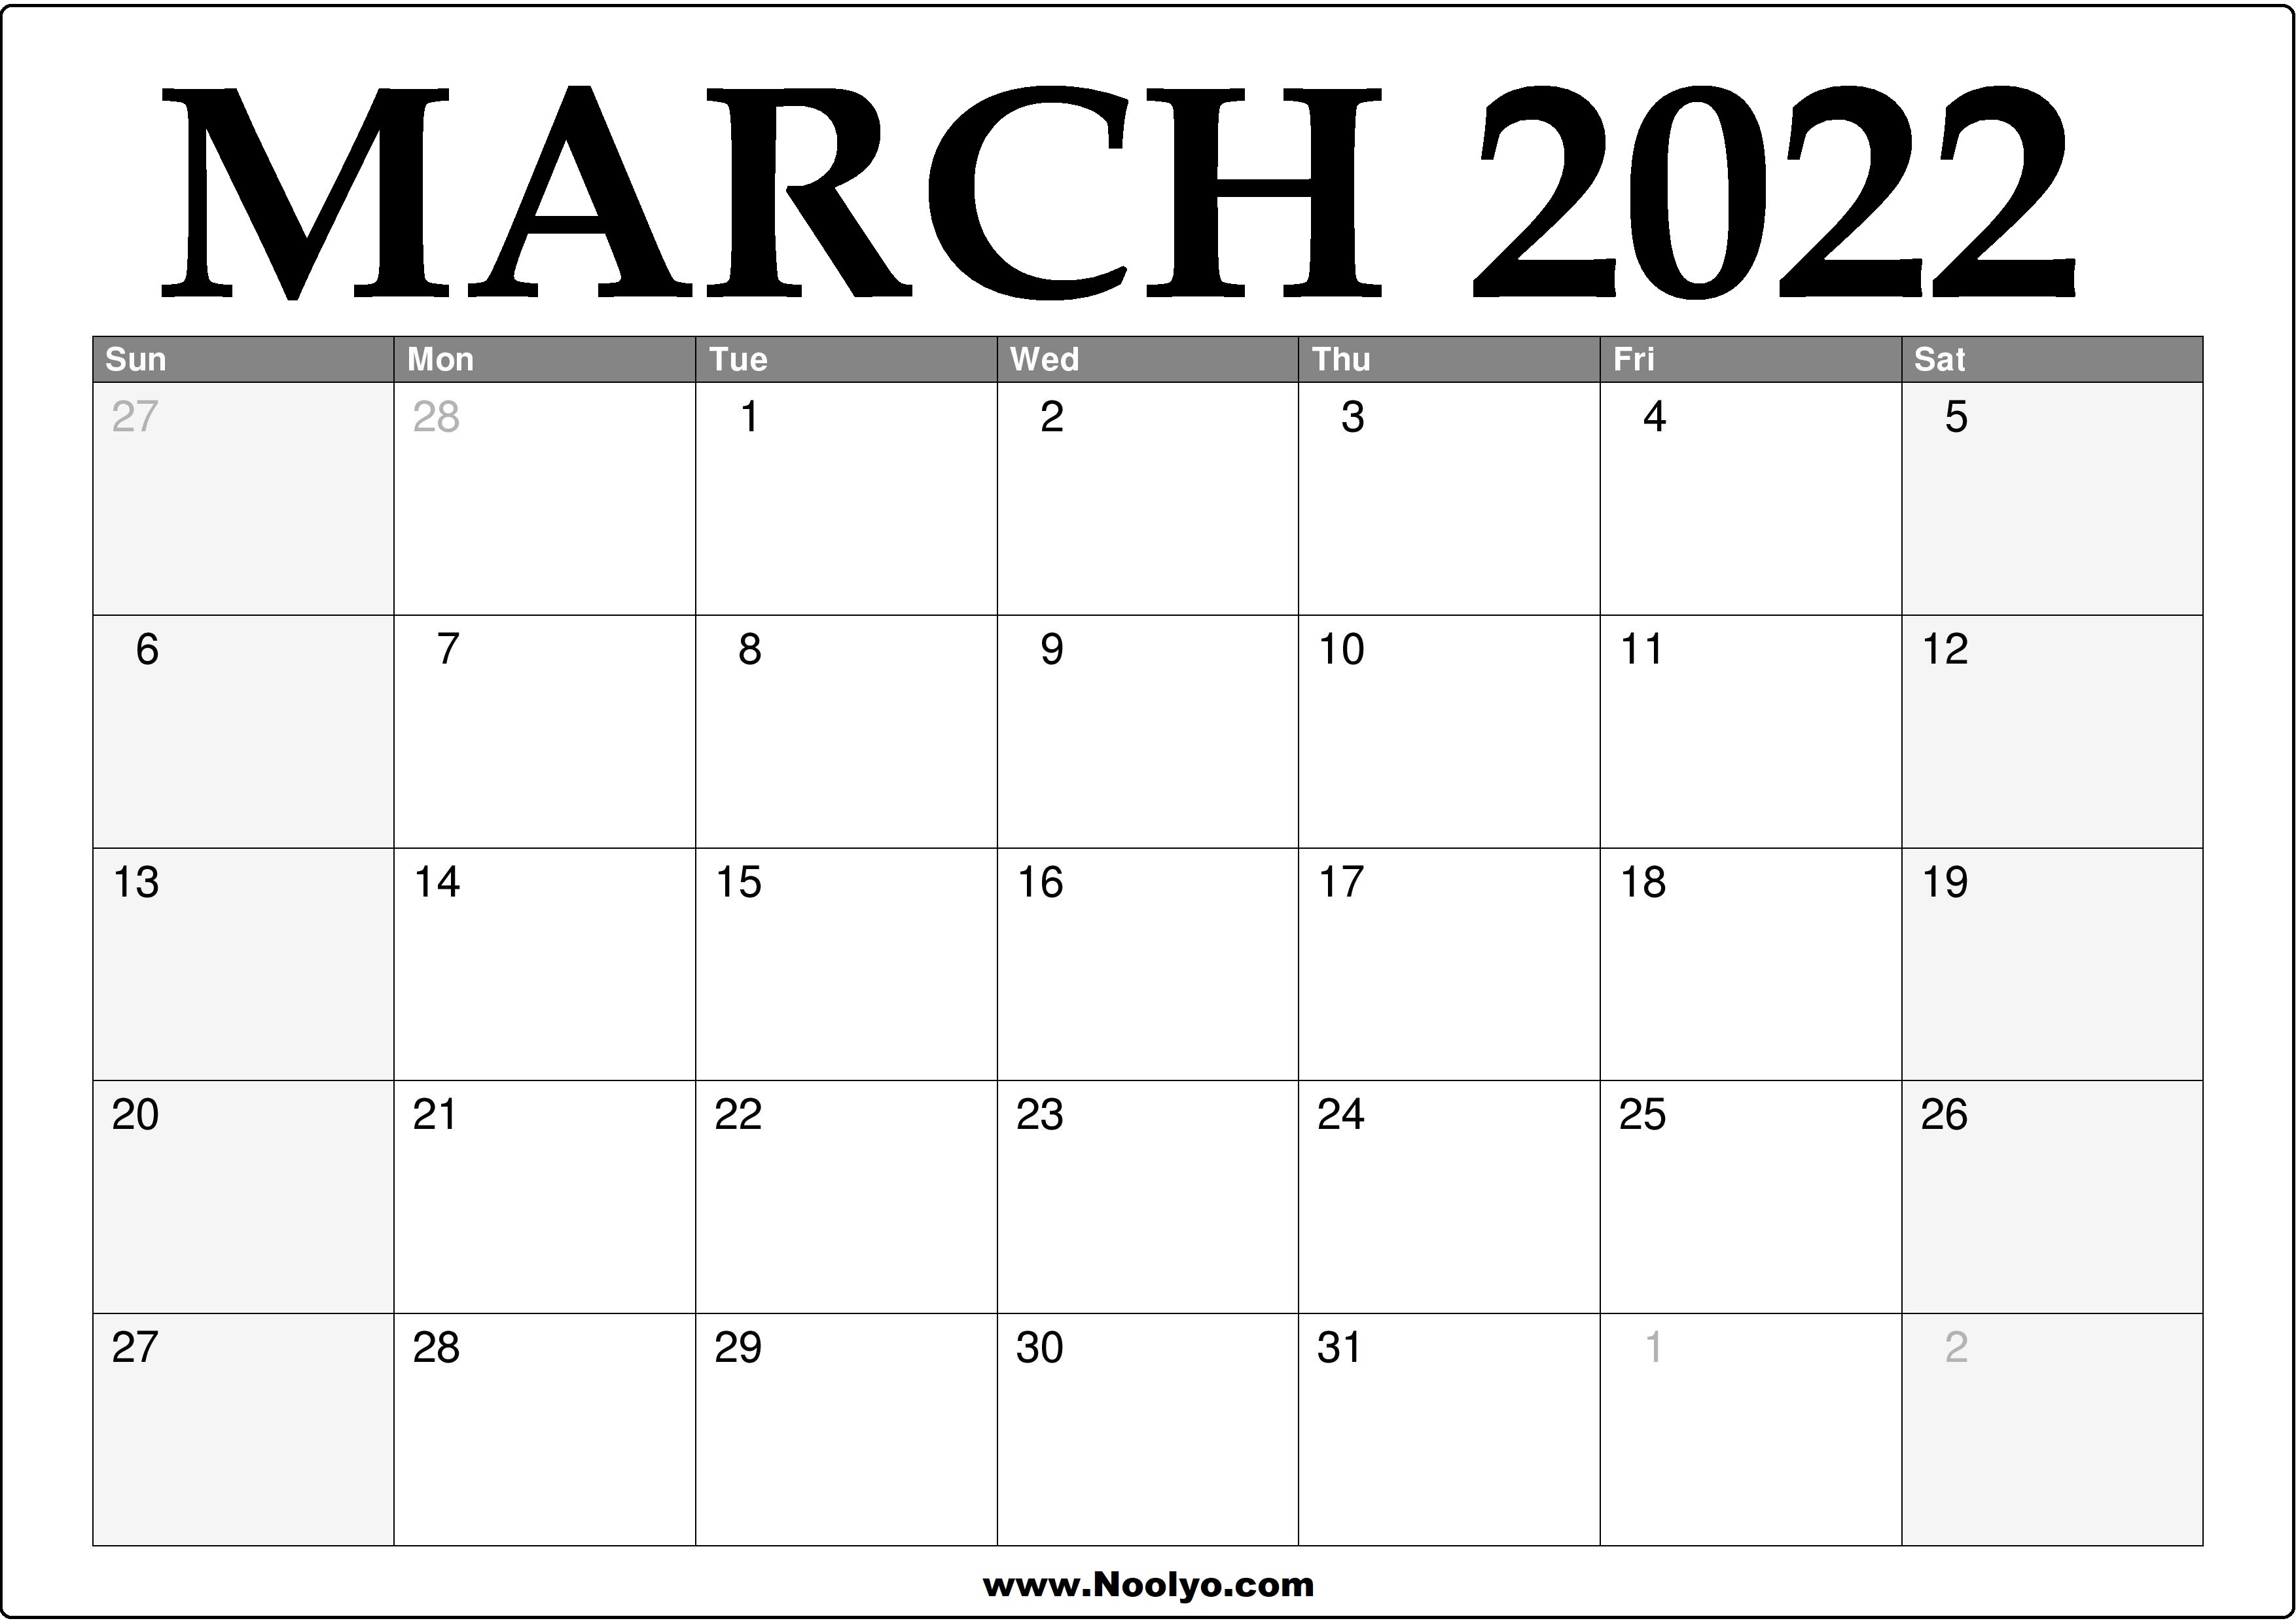 March calendar. March 2022. Календарь март 2022. March 2022 календарь. Календарь на март 2022 года.